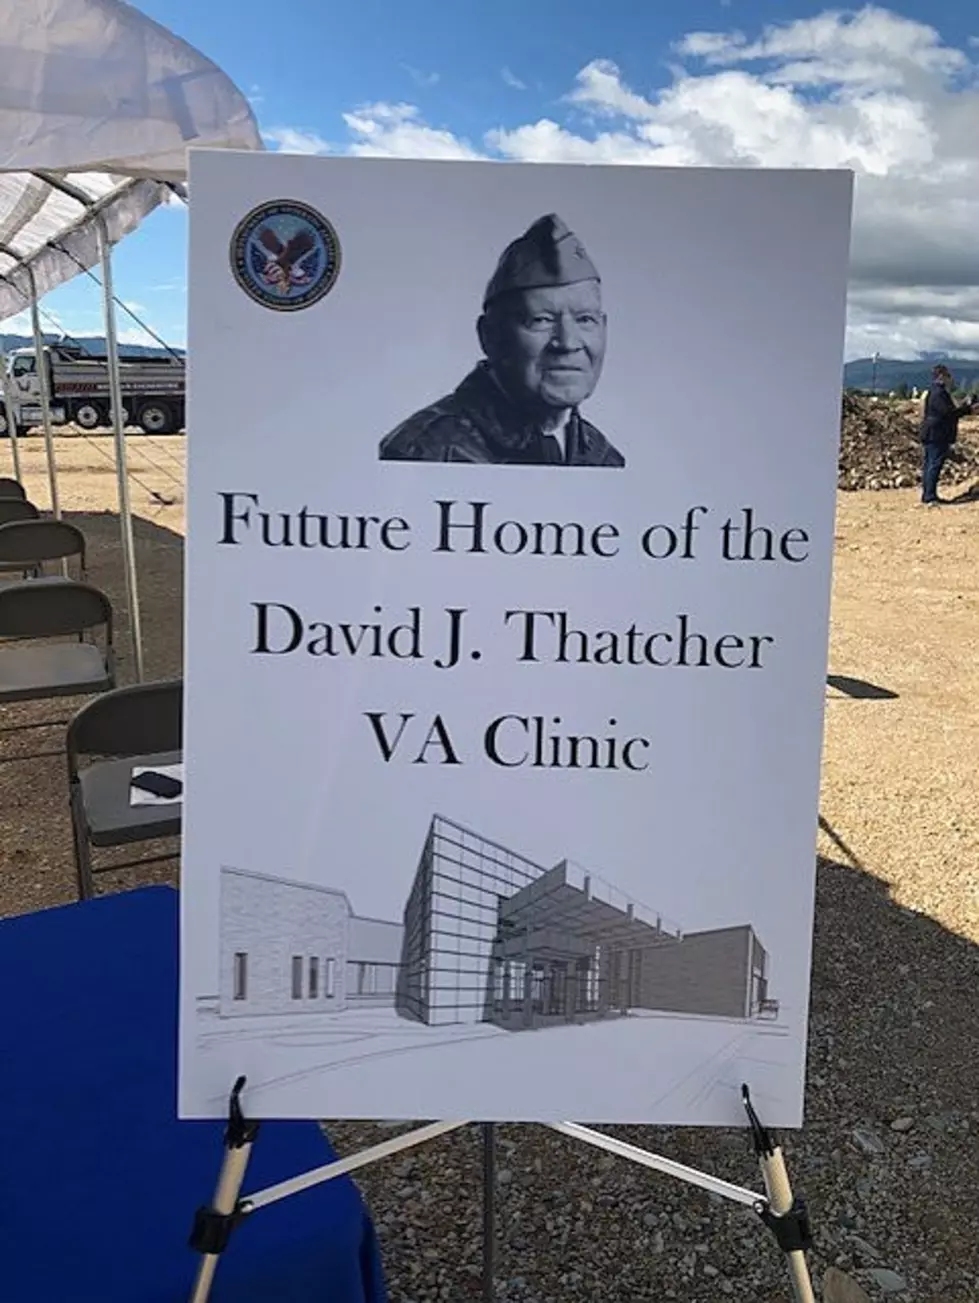 David J. Thatcher VA Clinic Groundbreaking in Missoula